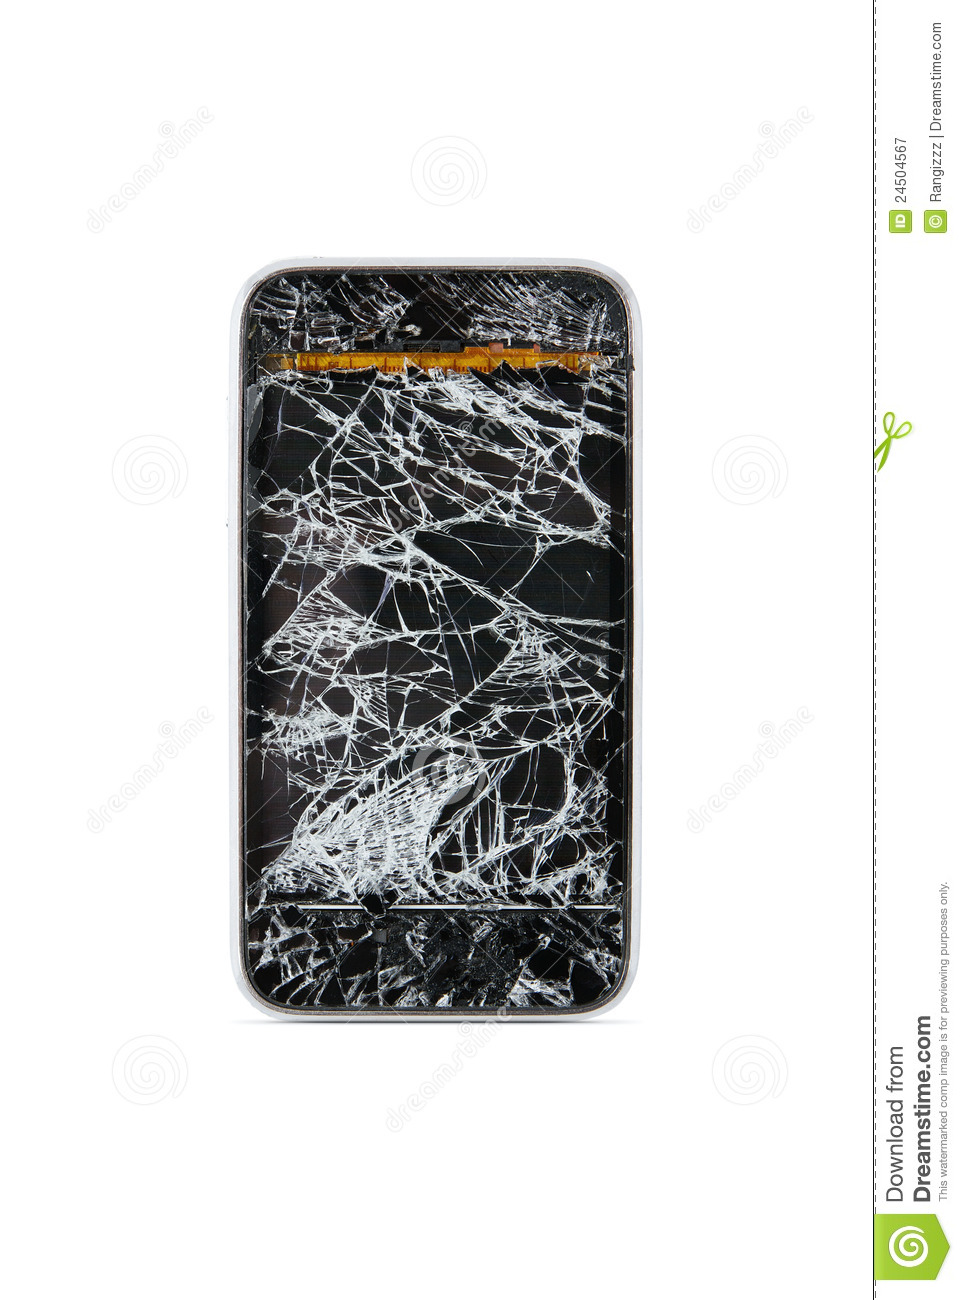 Broken Smart Phone Royalty Free Stock Photography   Image  24504567